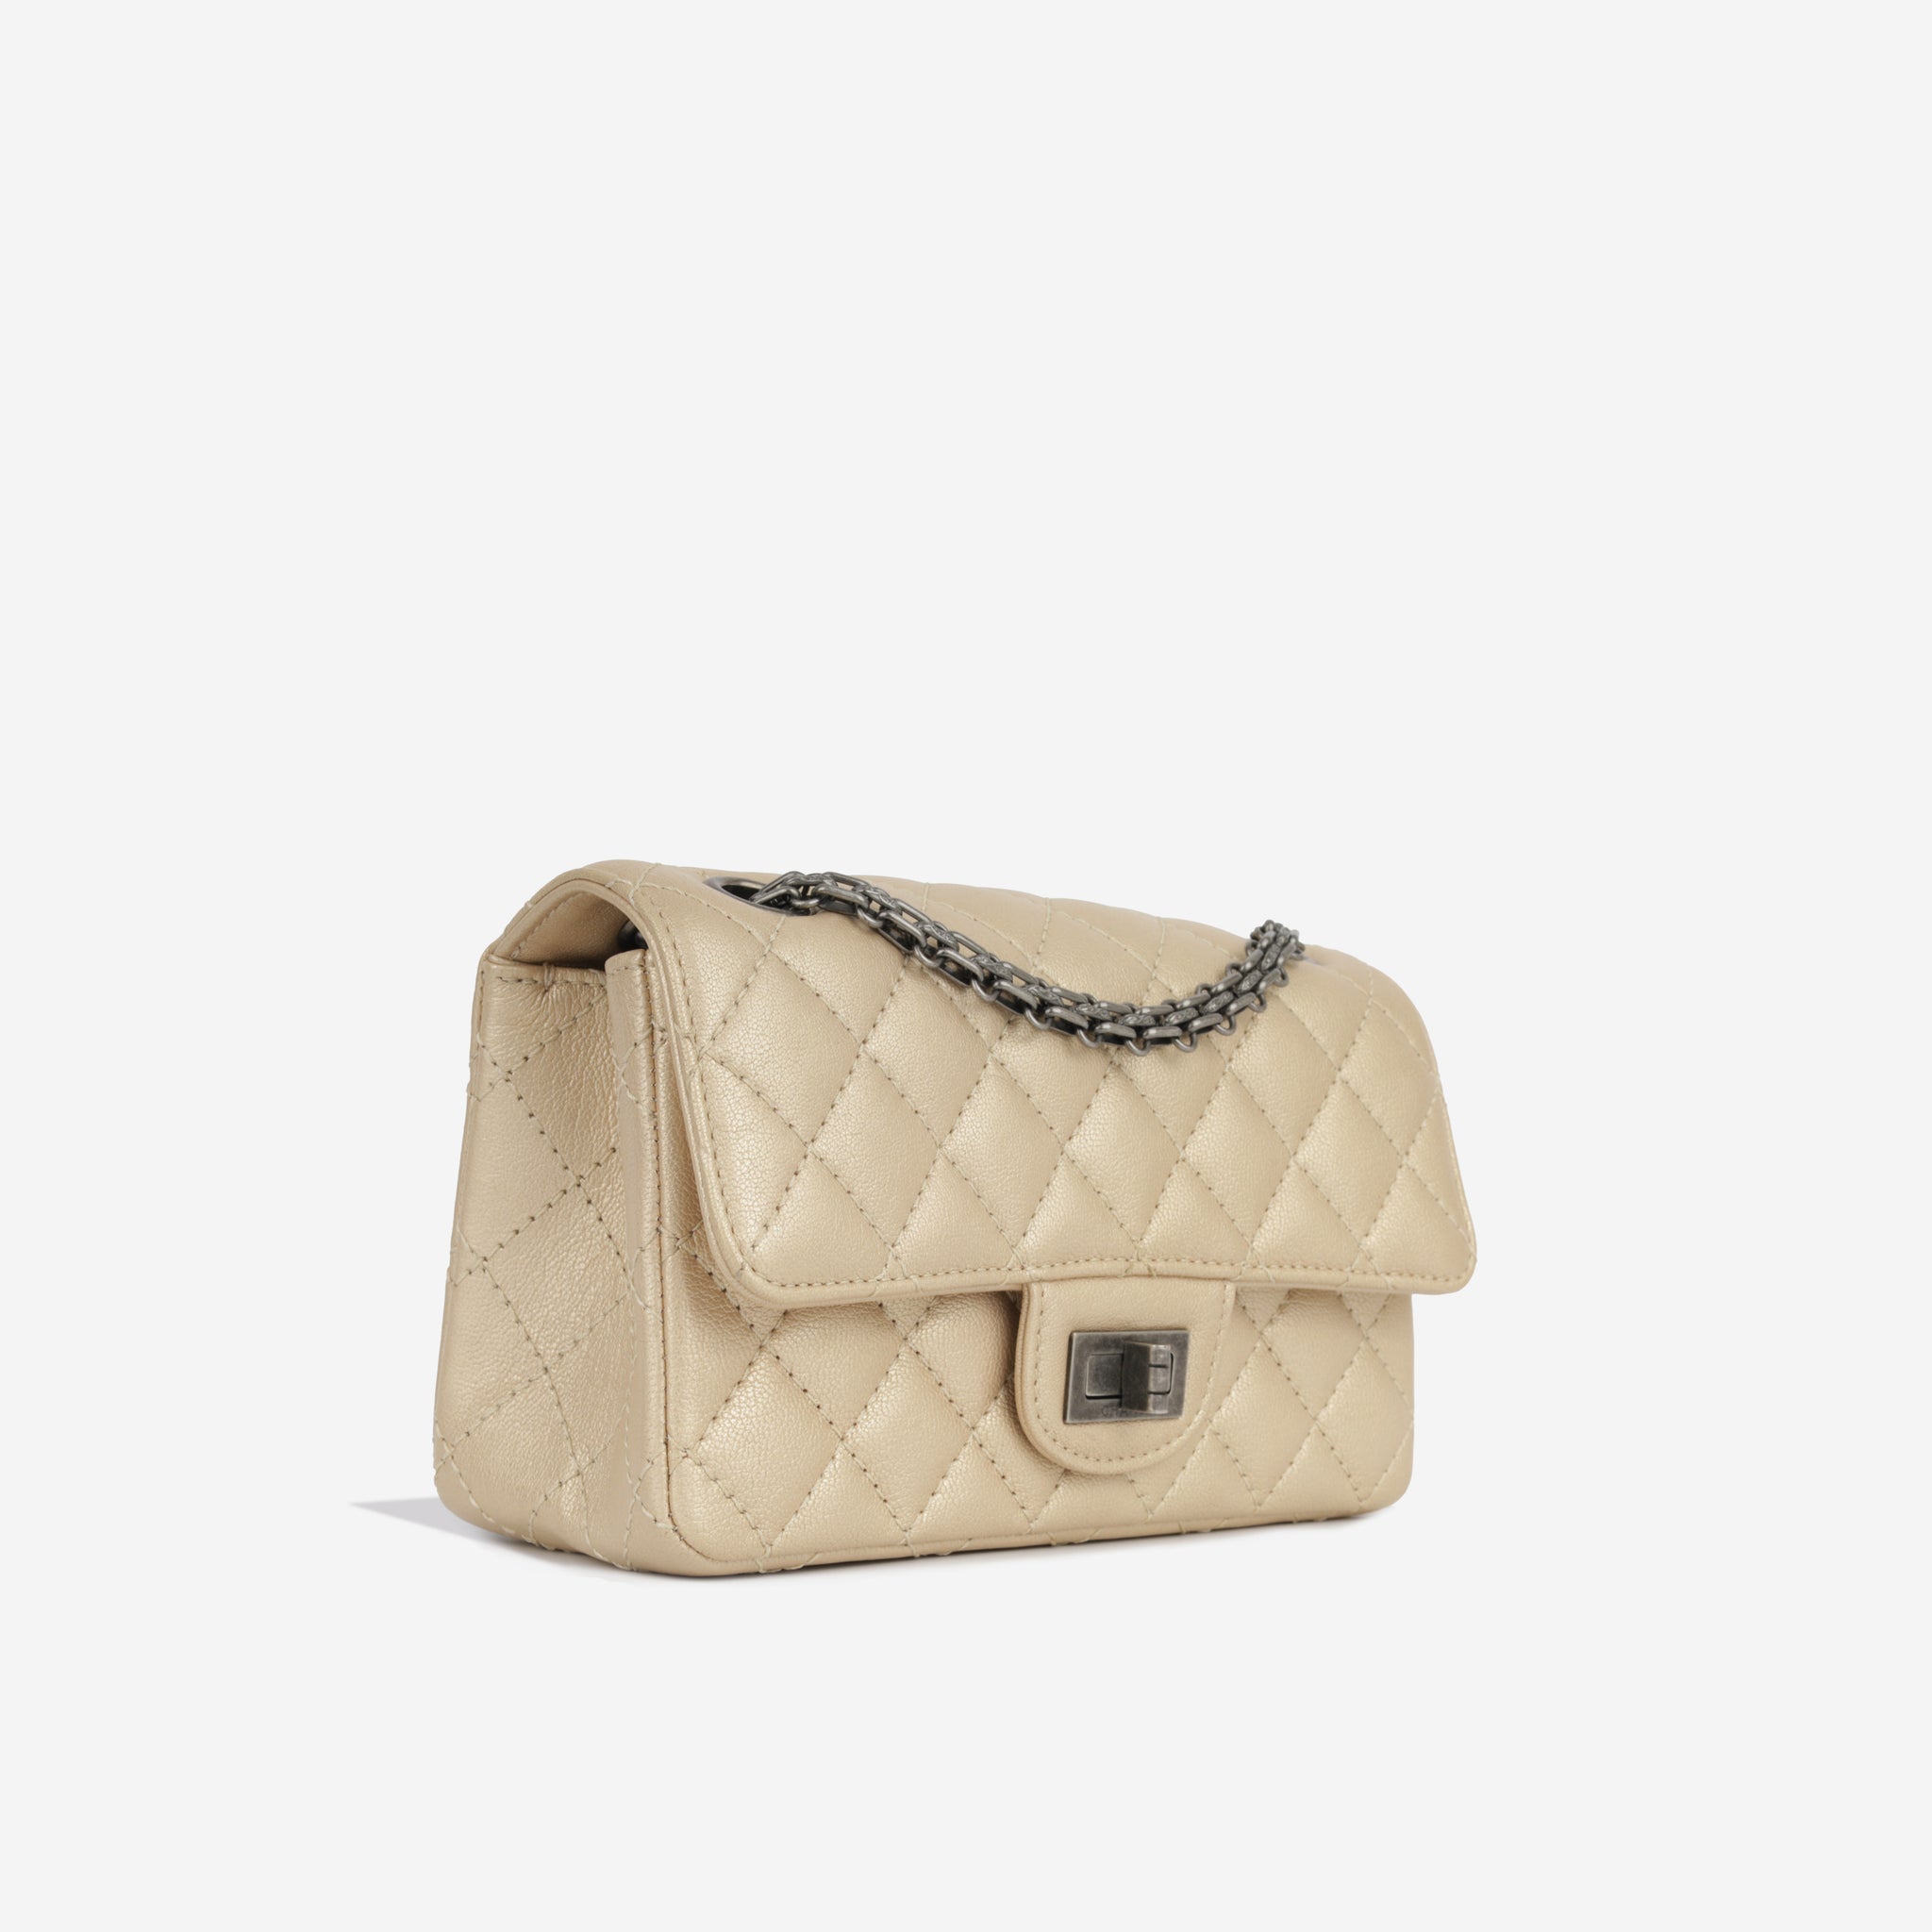 Chanel - Mini 2.55 Handbag - Champagne Aged Calfskin - RHW - 2019